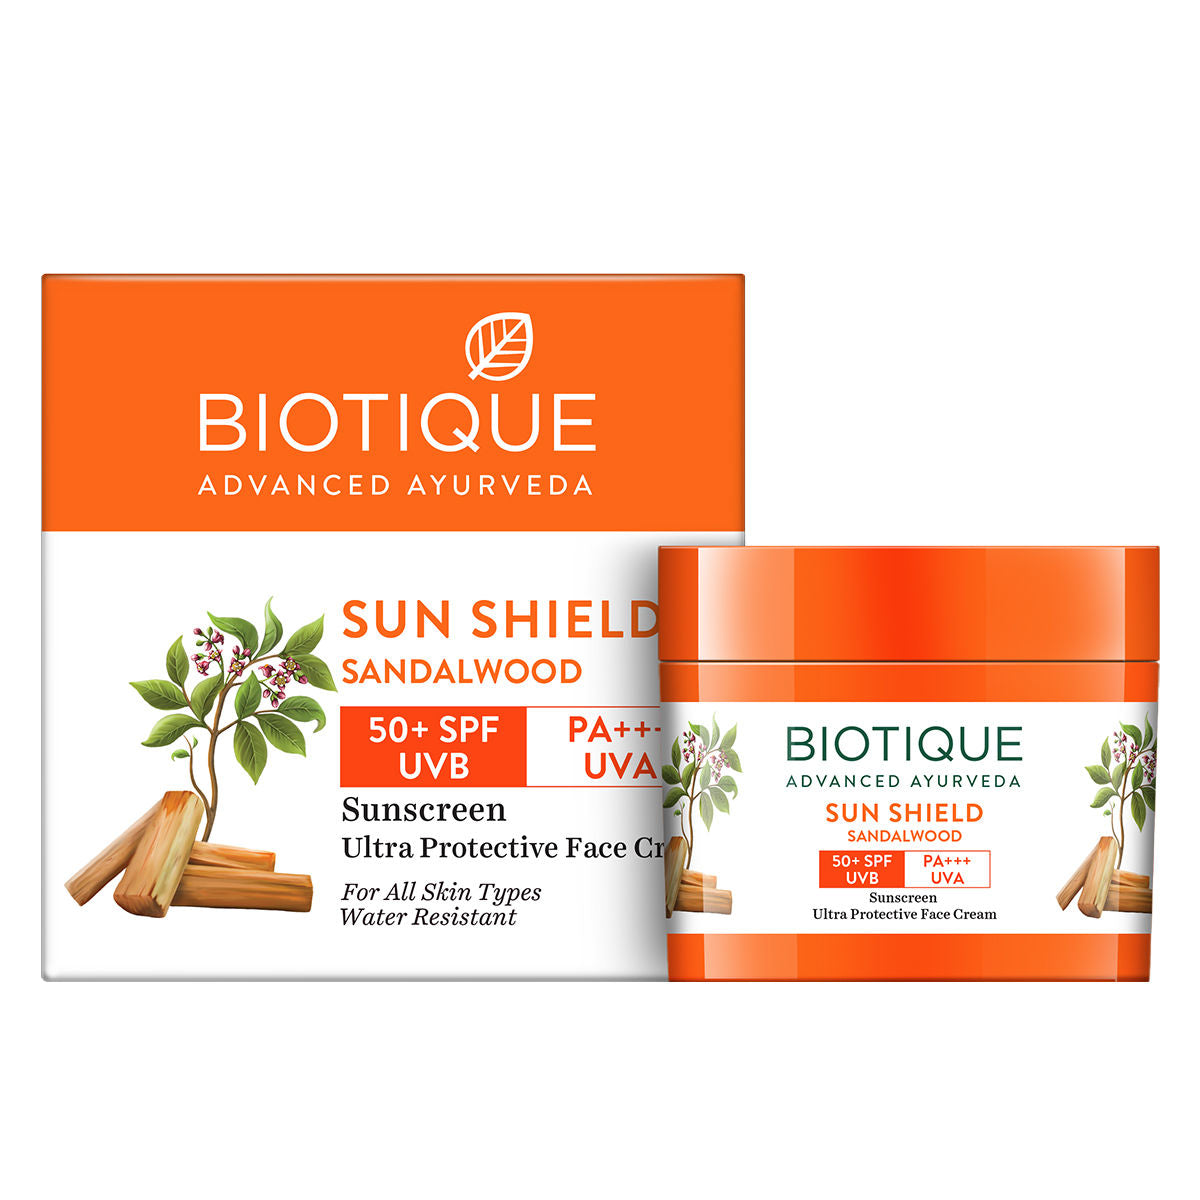 Biotique Advanced Ayurveda Sun Shield sandalwood 50+SPF UVB Sunscreen - BUDNE